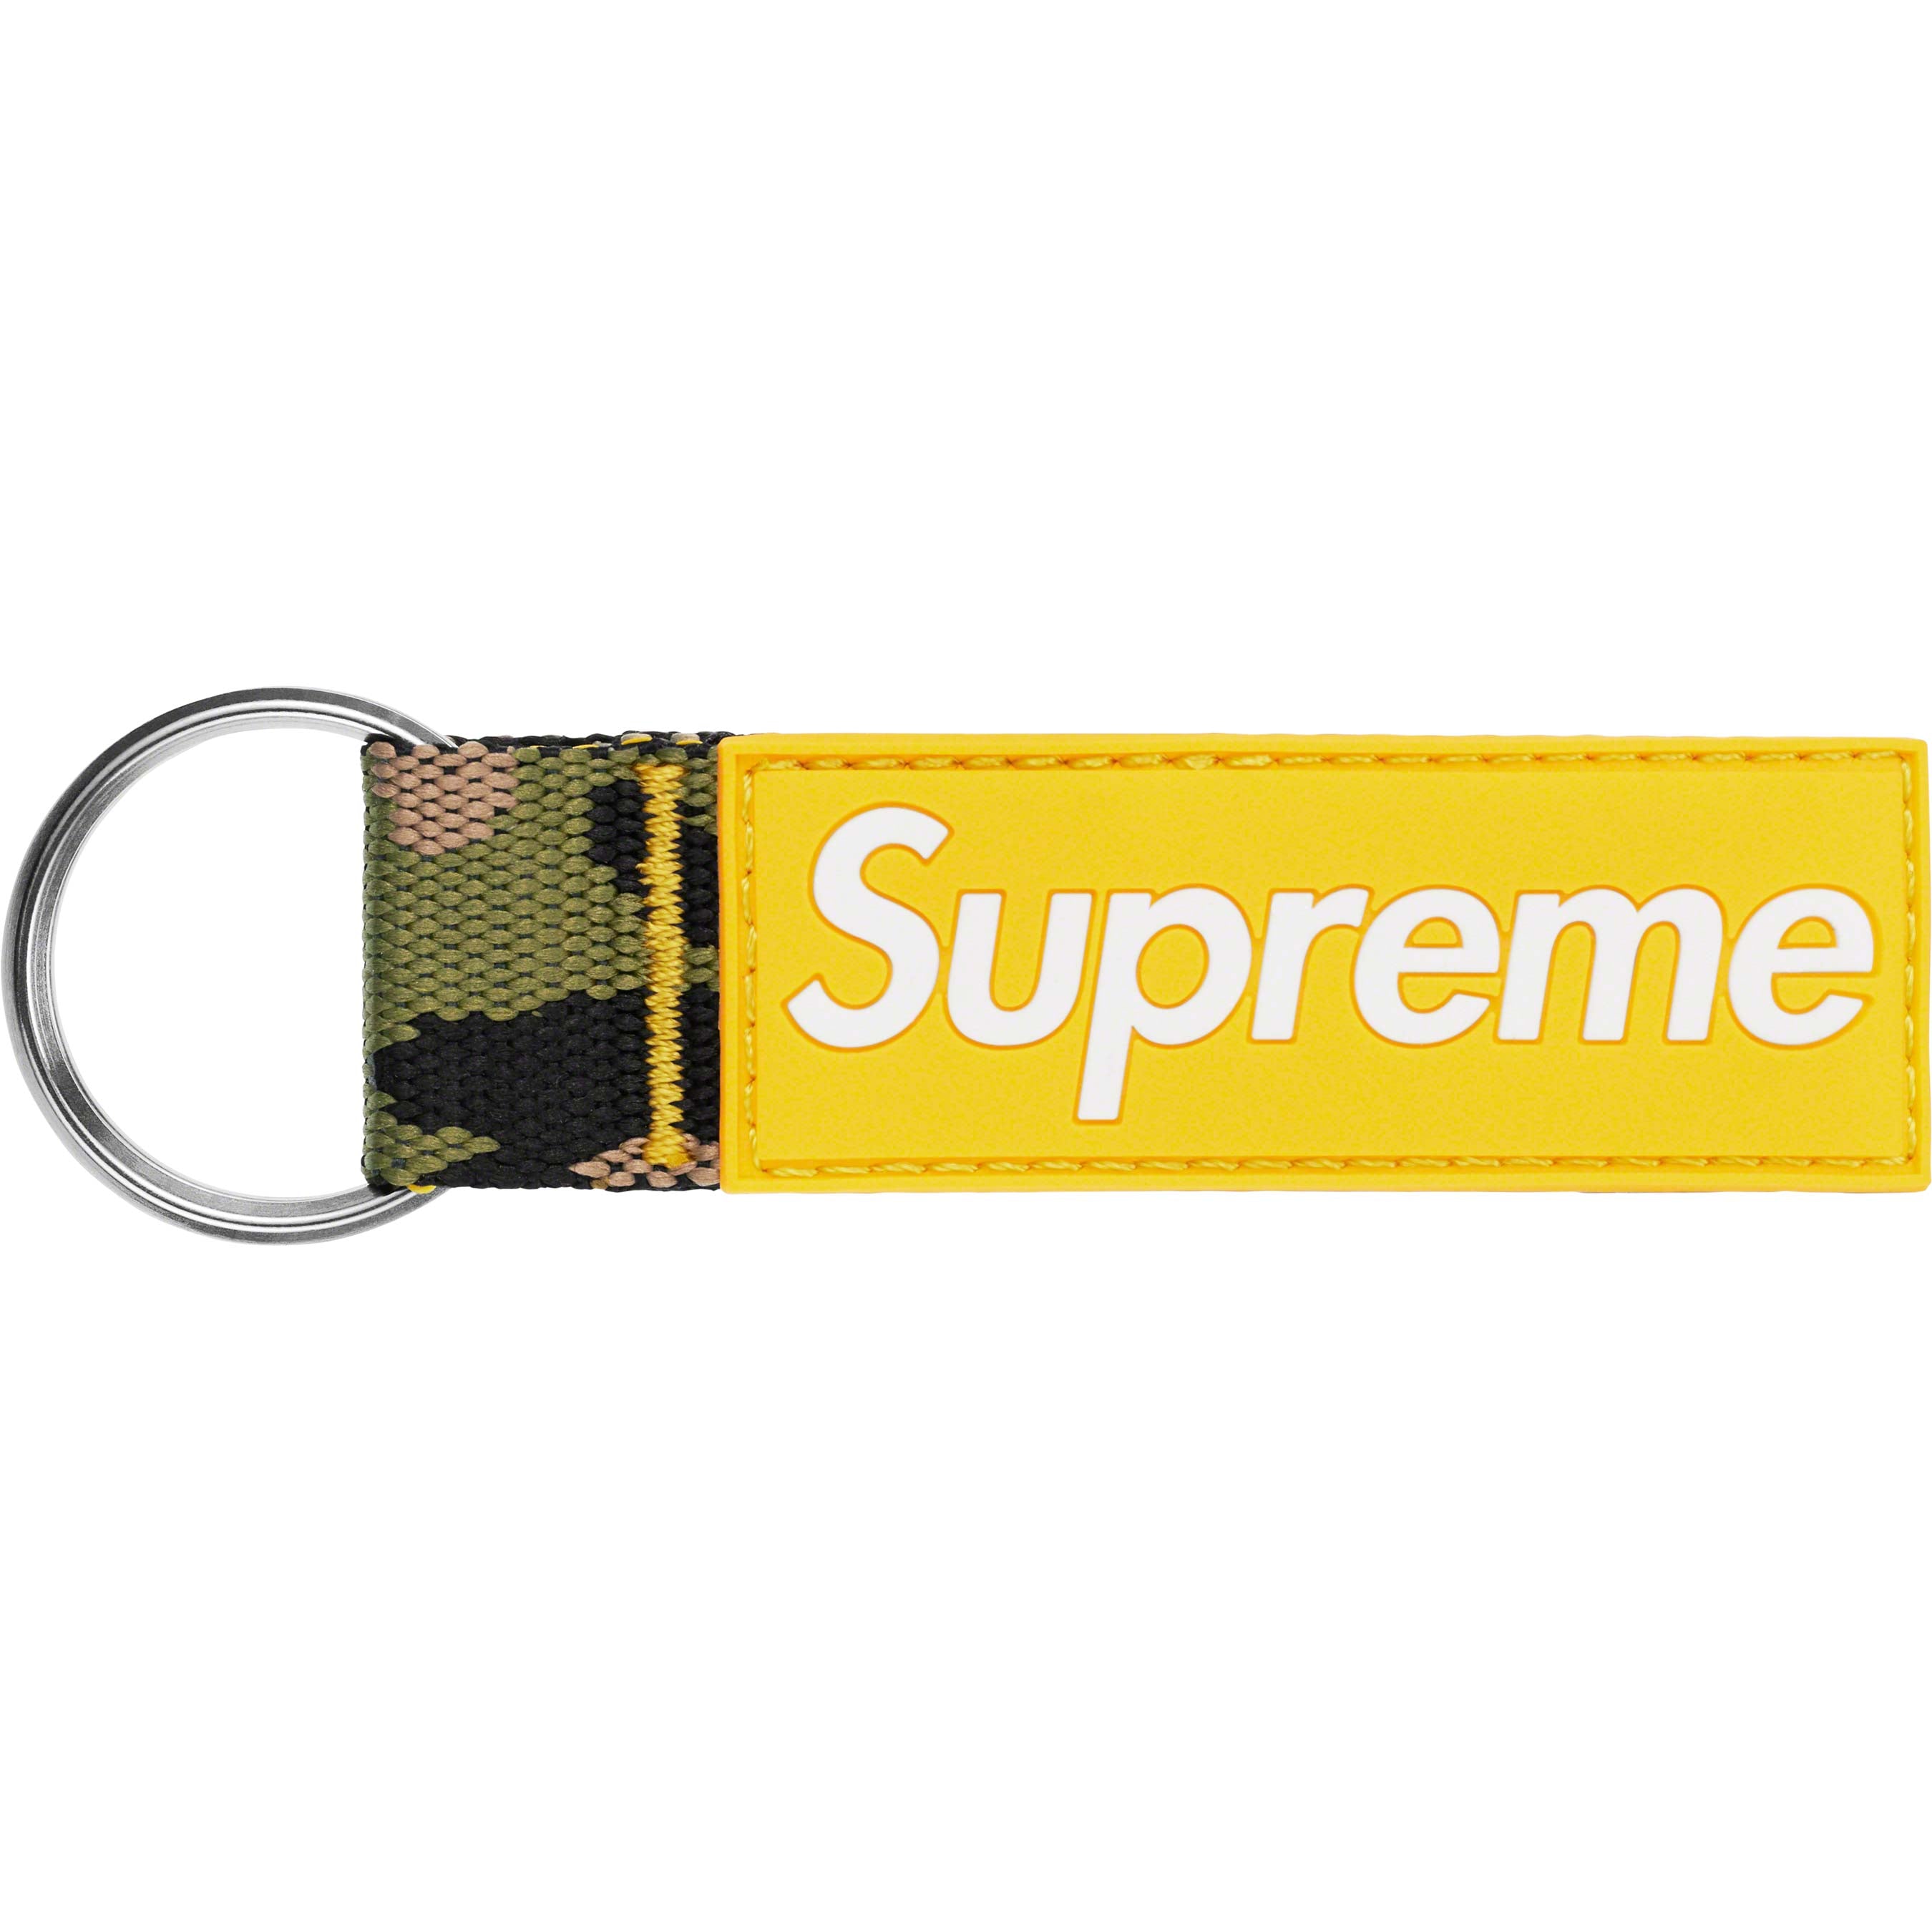 Supreme Lanyard Yellow Keychain